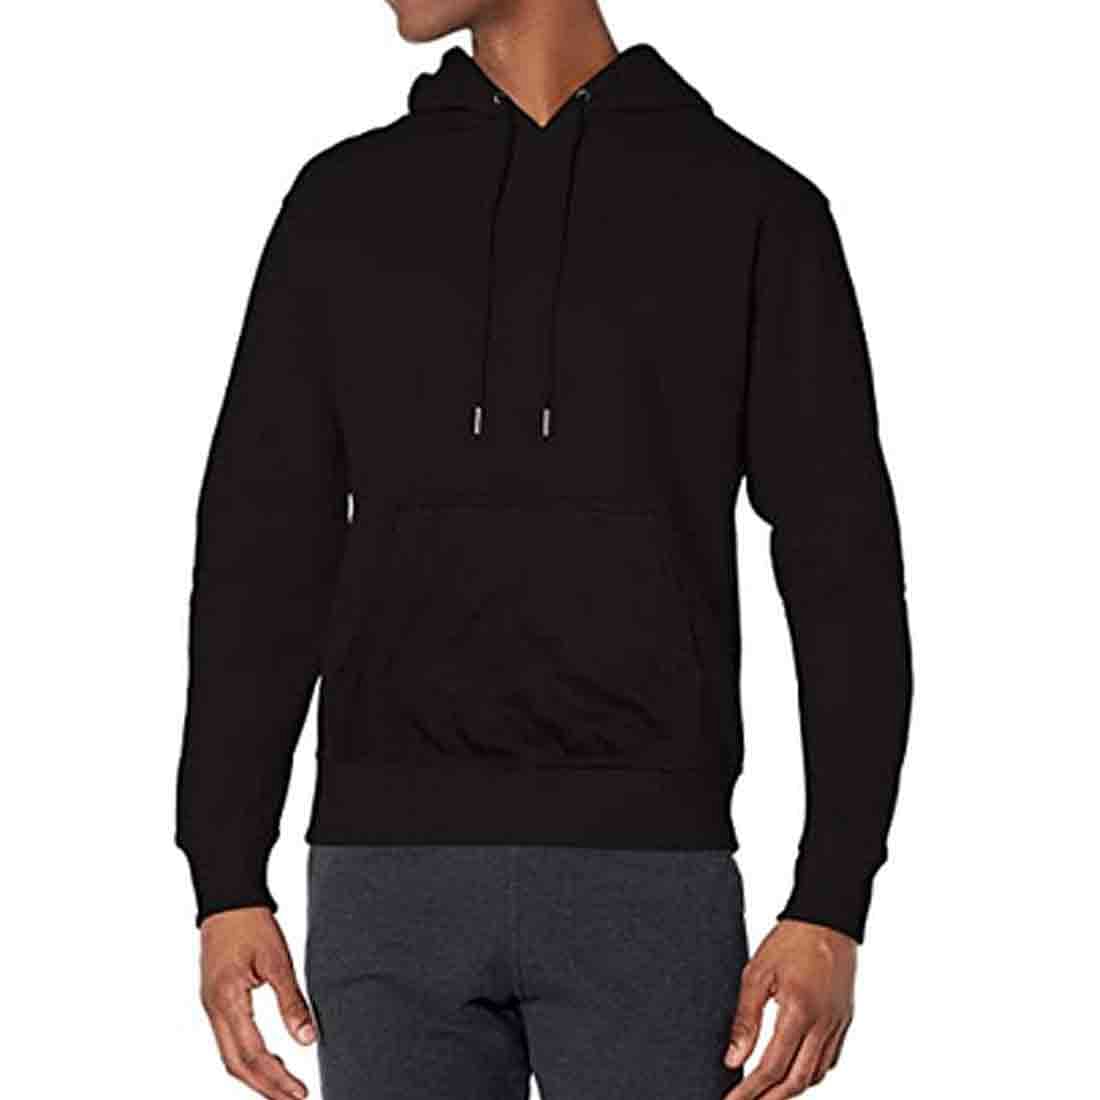 Nutcase stylish hoodie sweatshirt Unisex - Error Nutcase